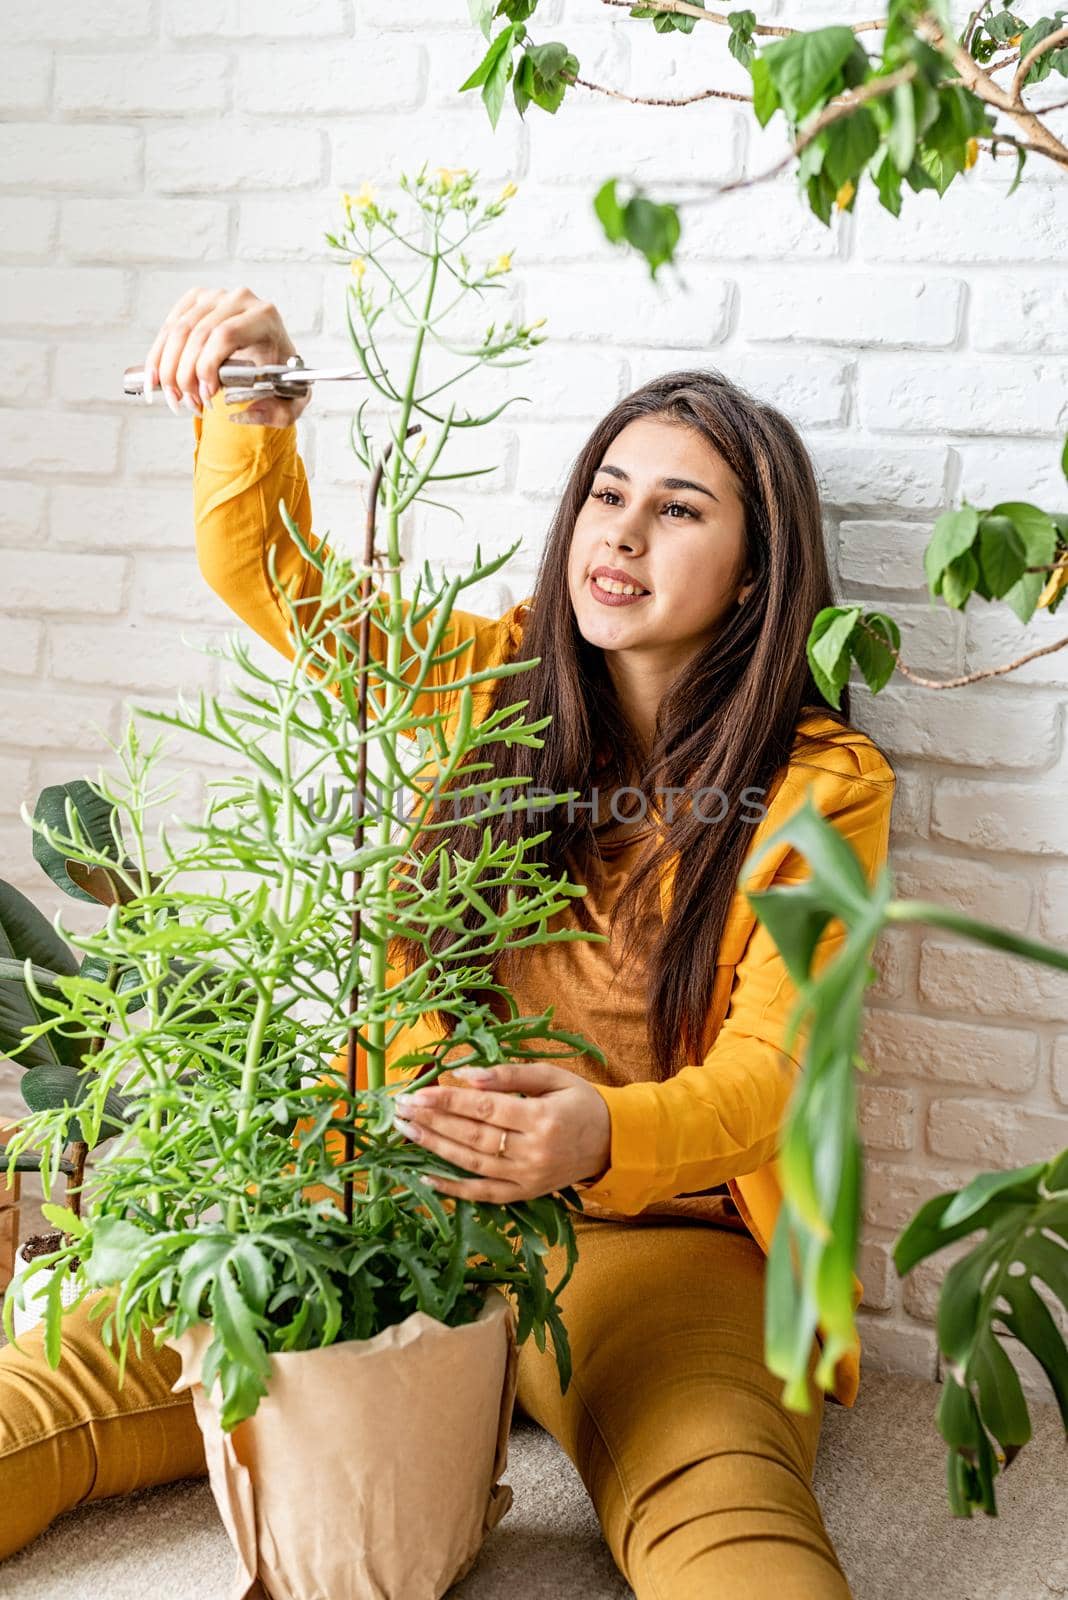 Woman gardener taking care of her home garden plants by Desperada